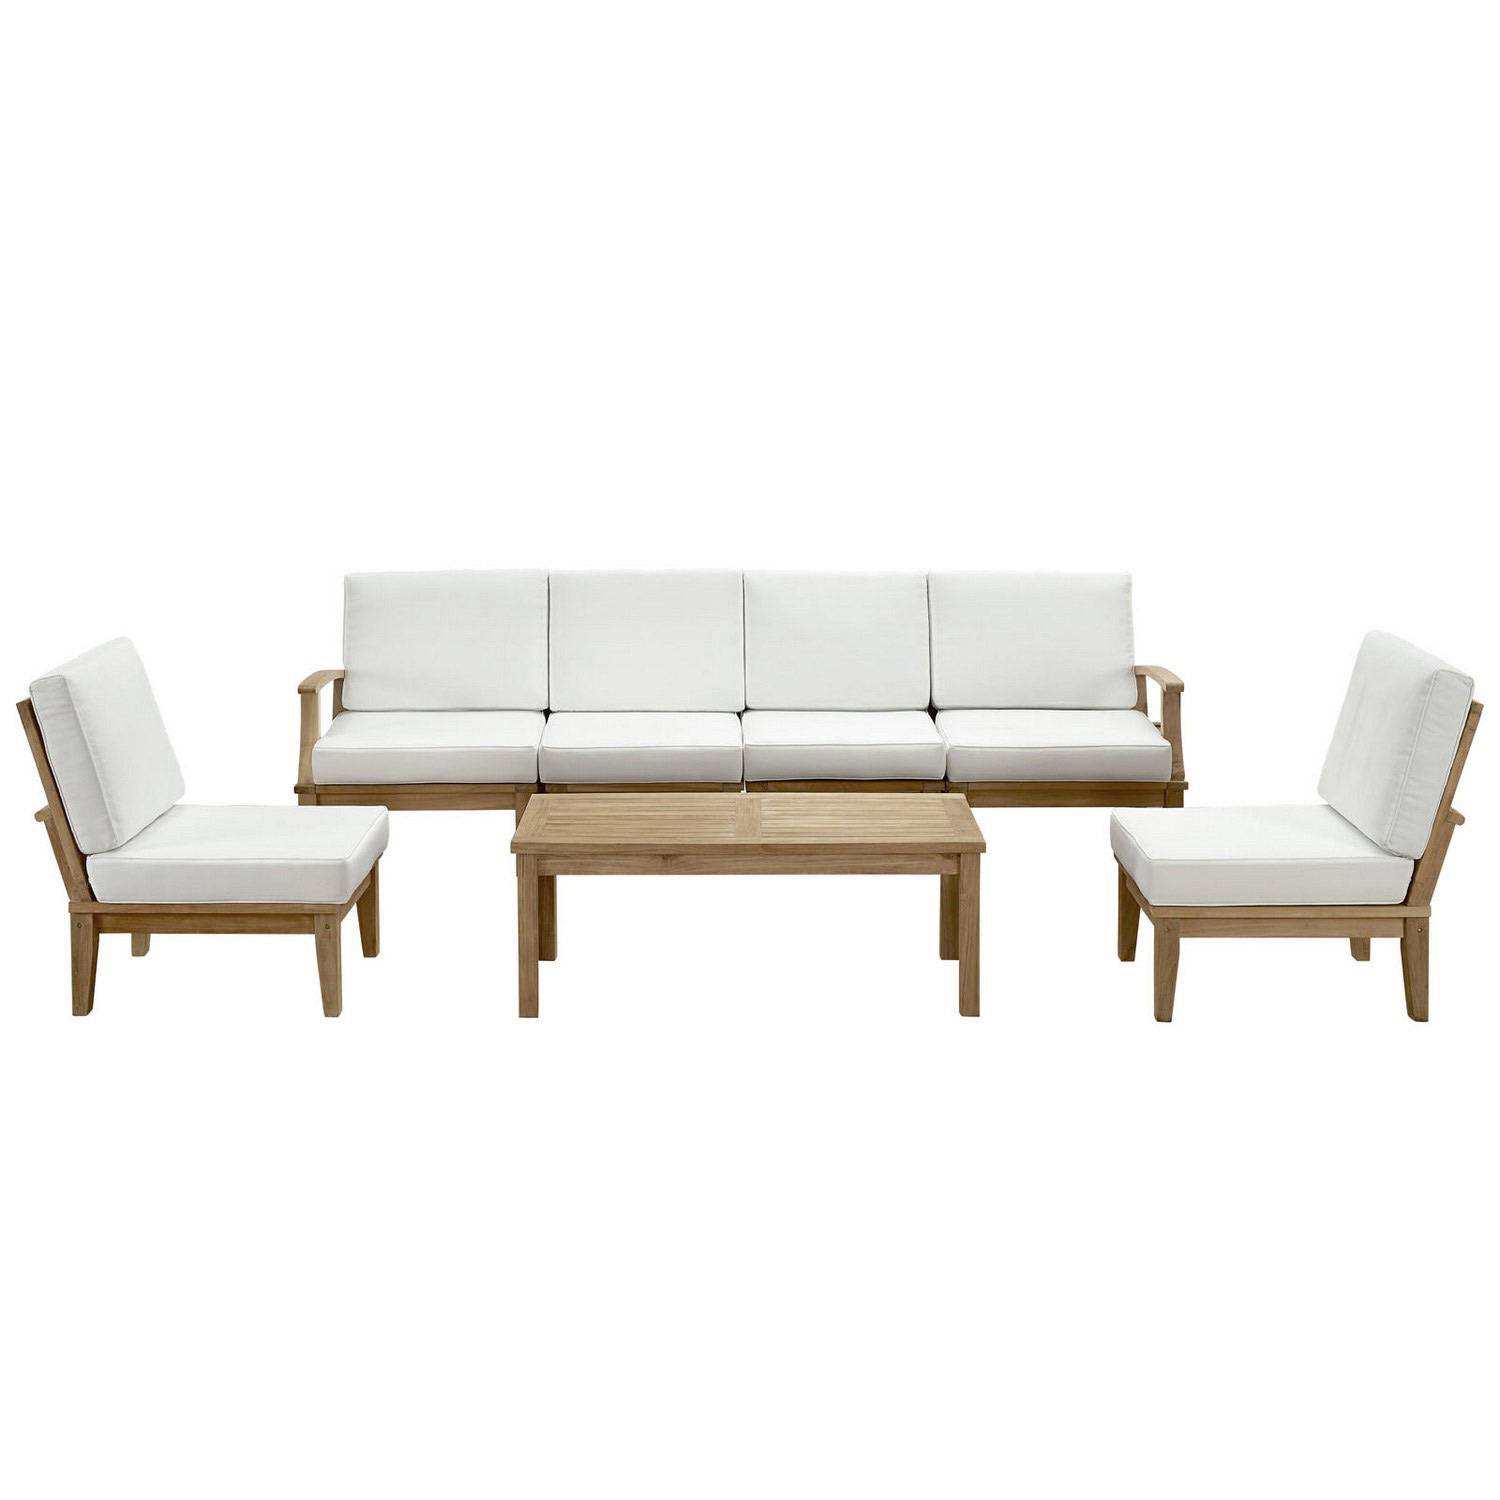 Modway Marina 7 Piece Outdoor Patio Teak Sofa Set - Natural White